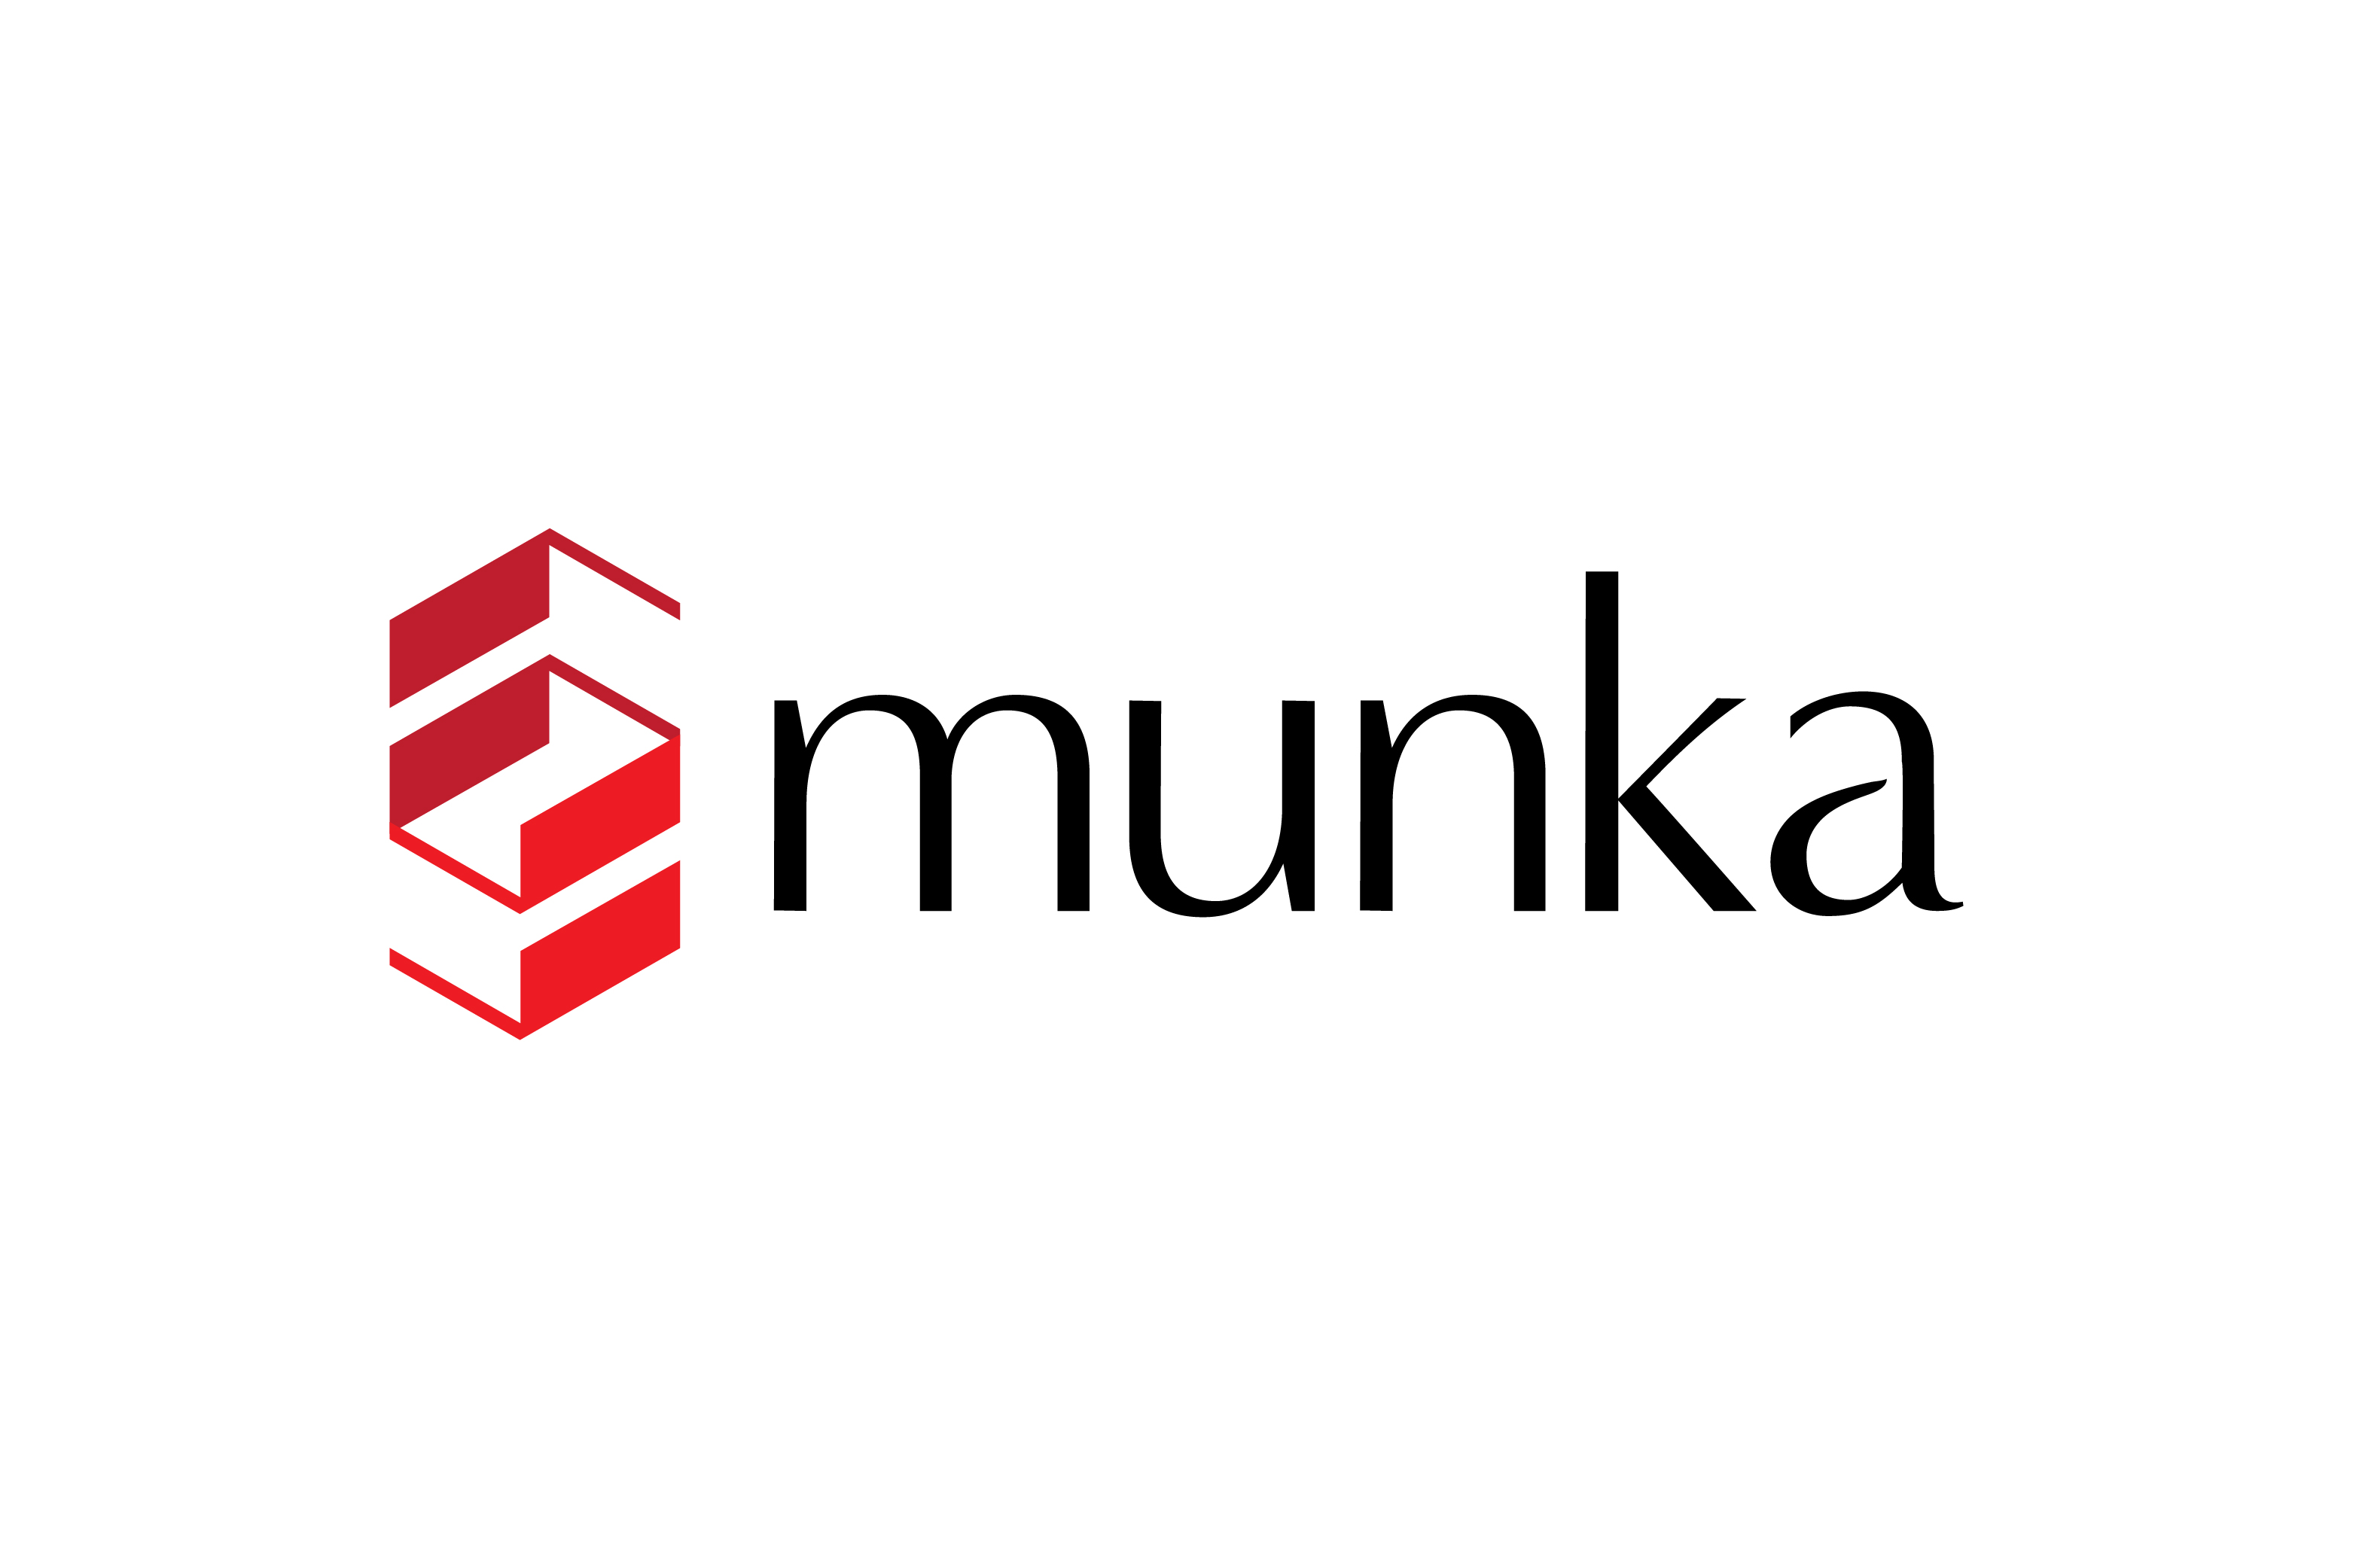 Munka Logo image